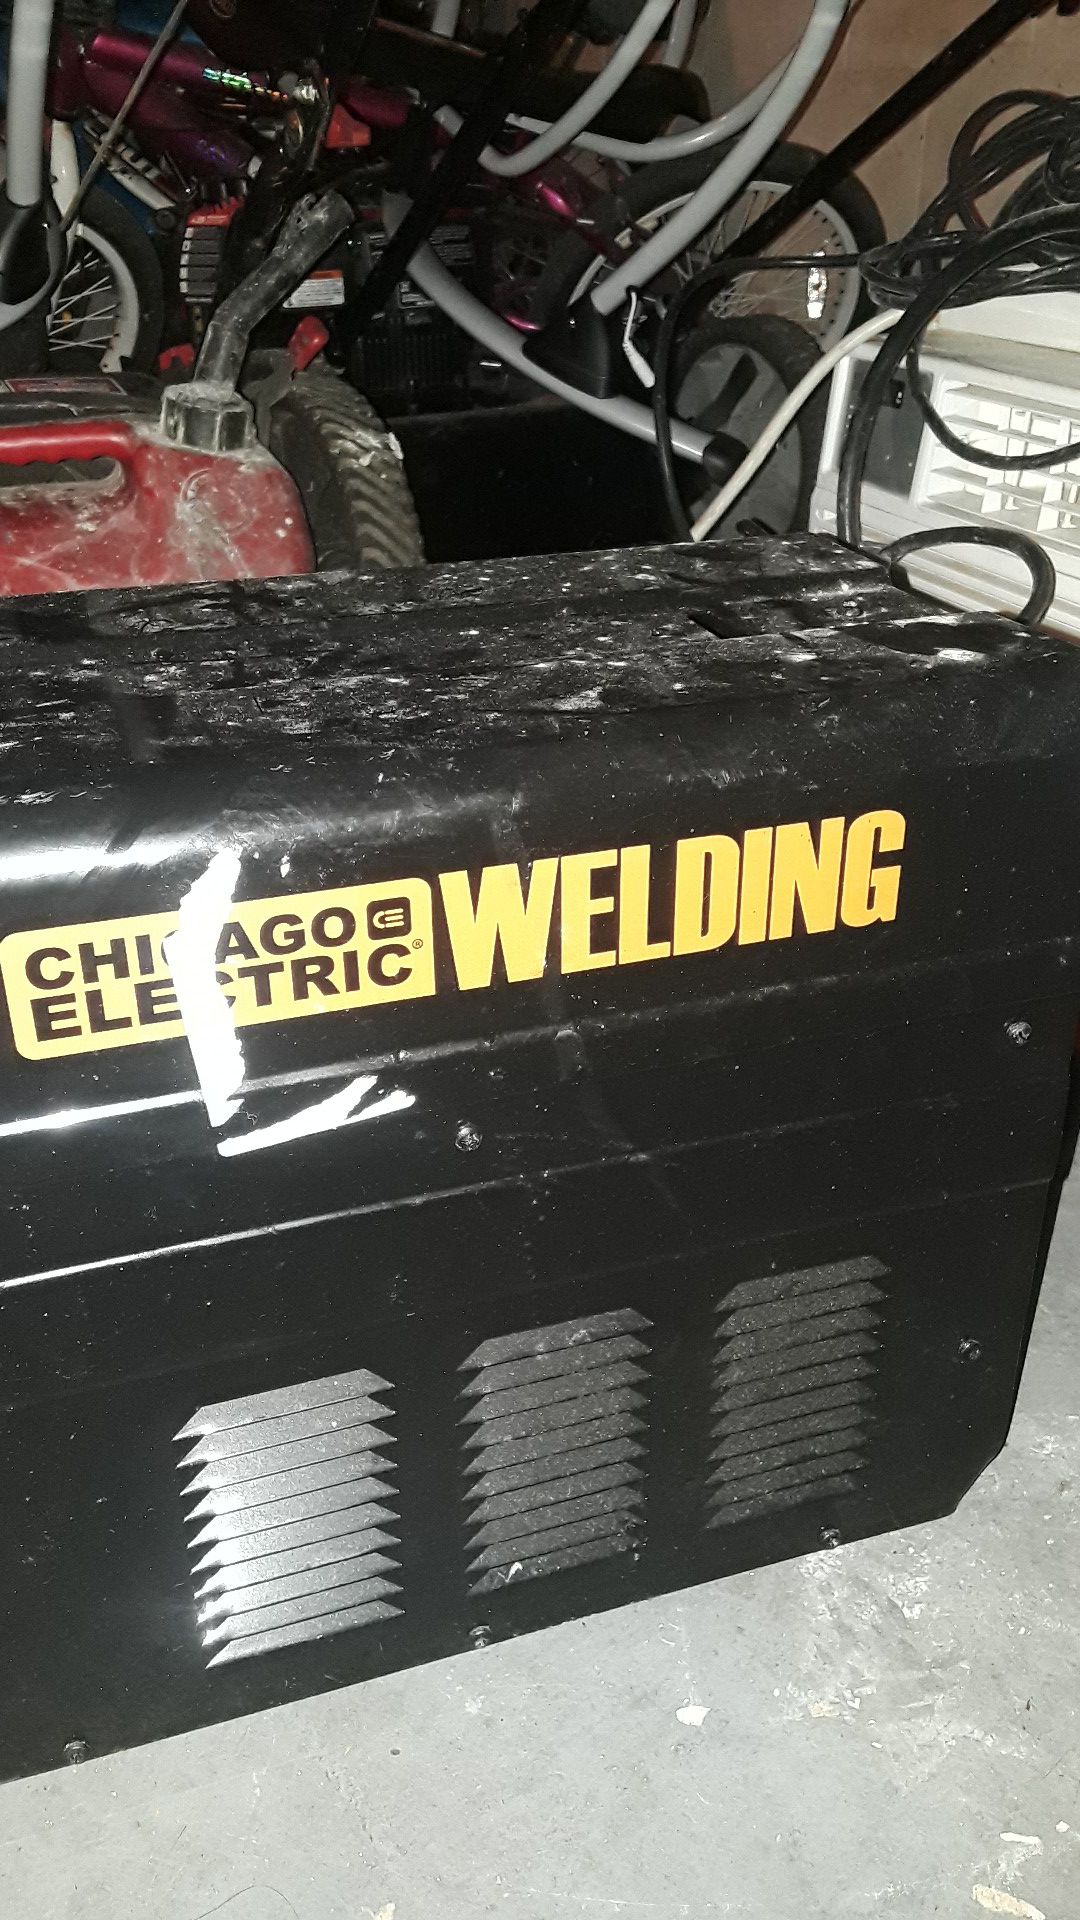 A welder machine wit all peices